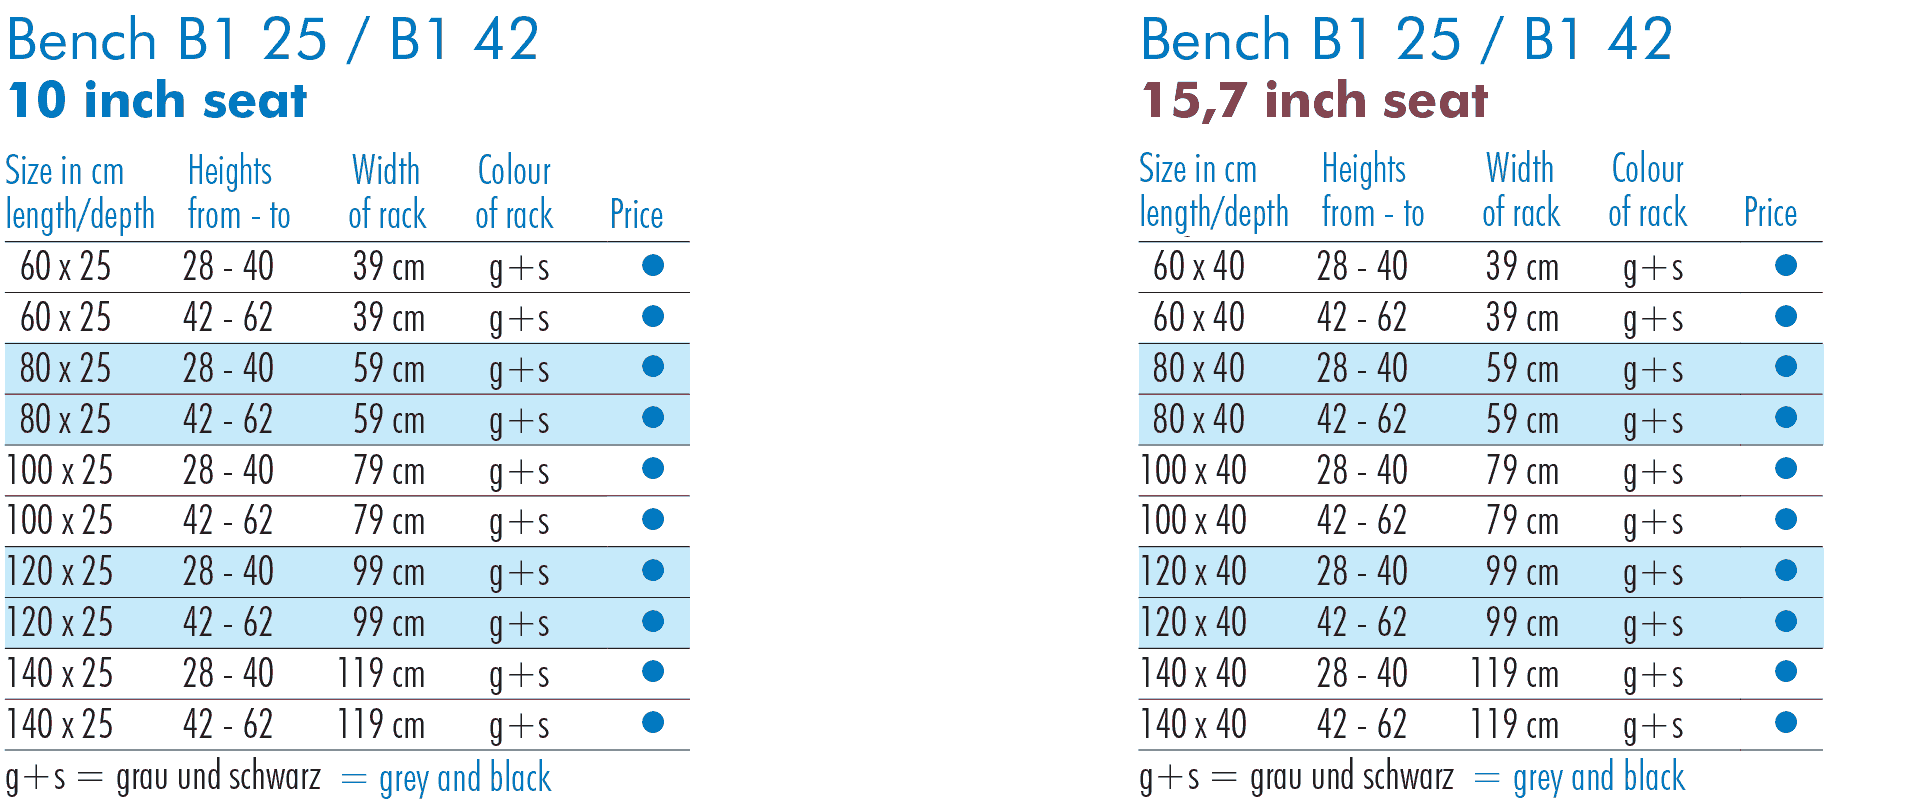 Sizes of bench B1